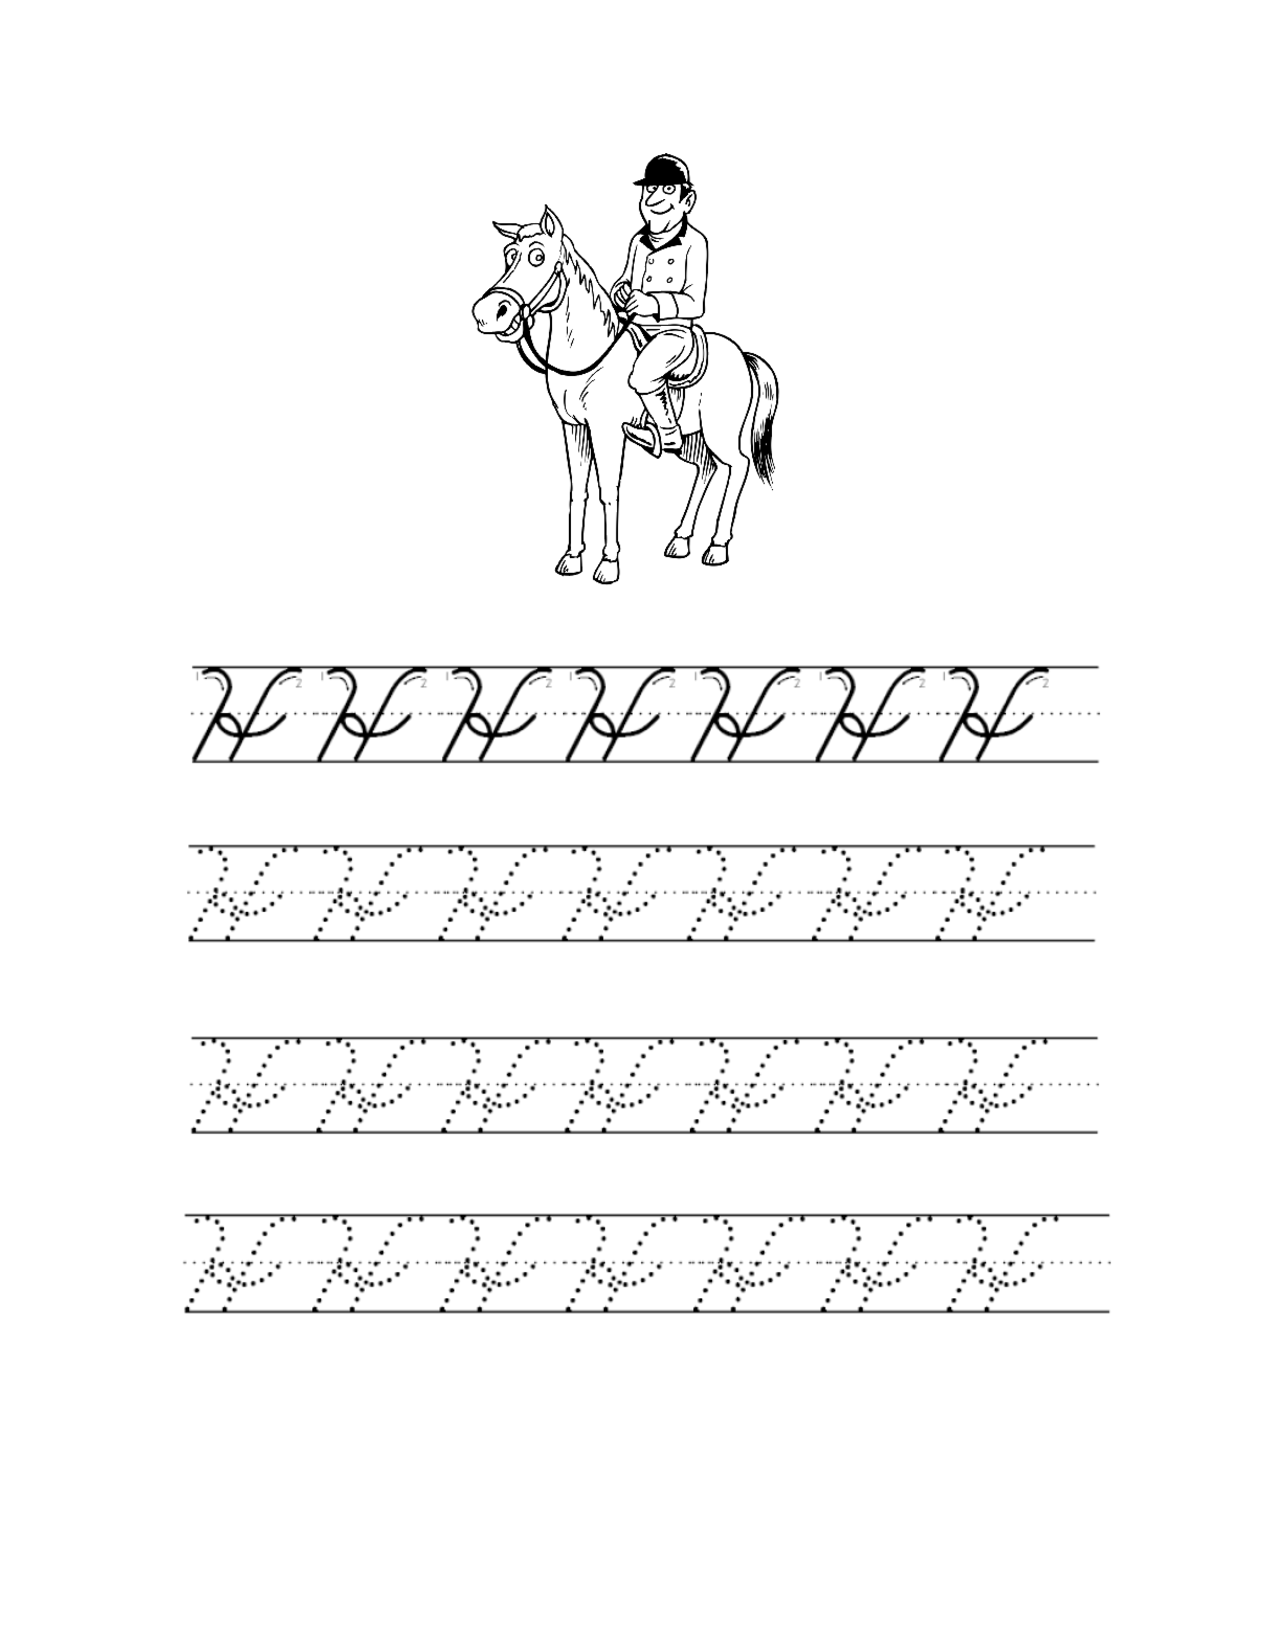 12 Best Images of Cursive Letters Lowercase H Worksheet - Cursive